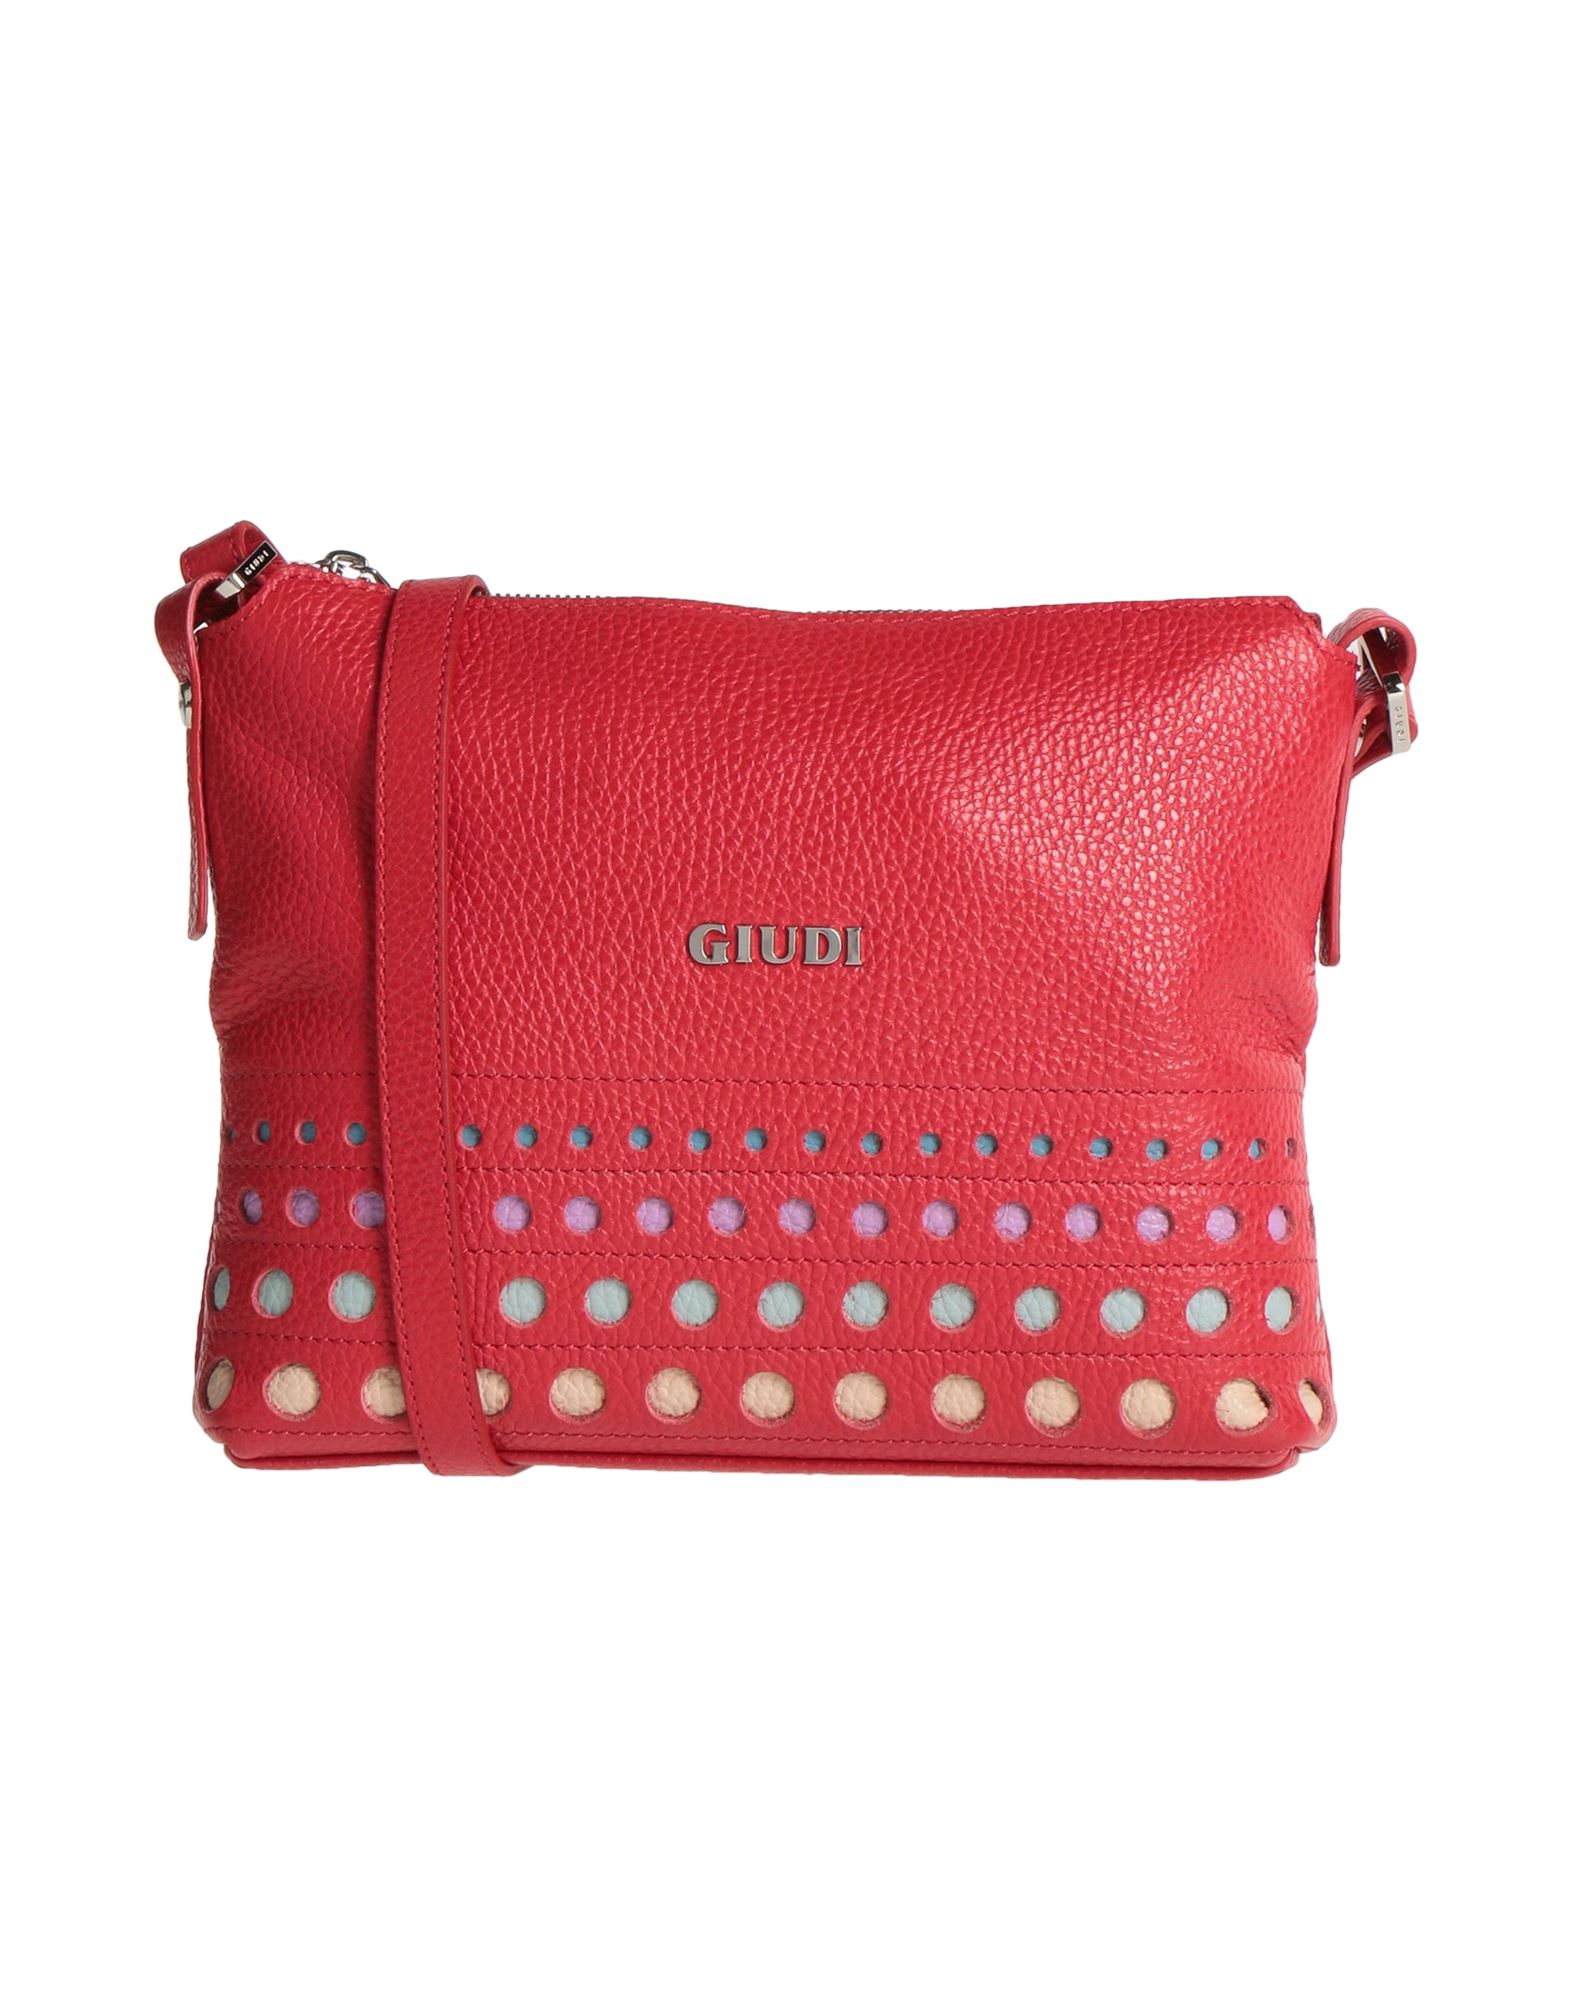 Giudi Handbags In Red